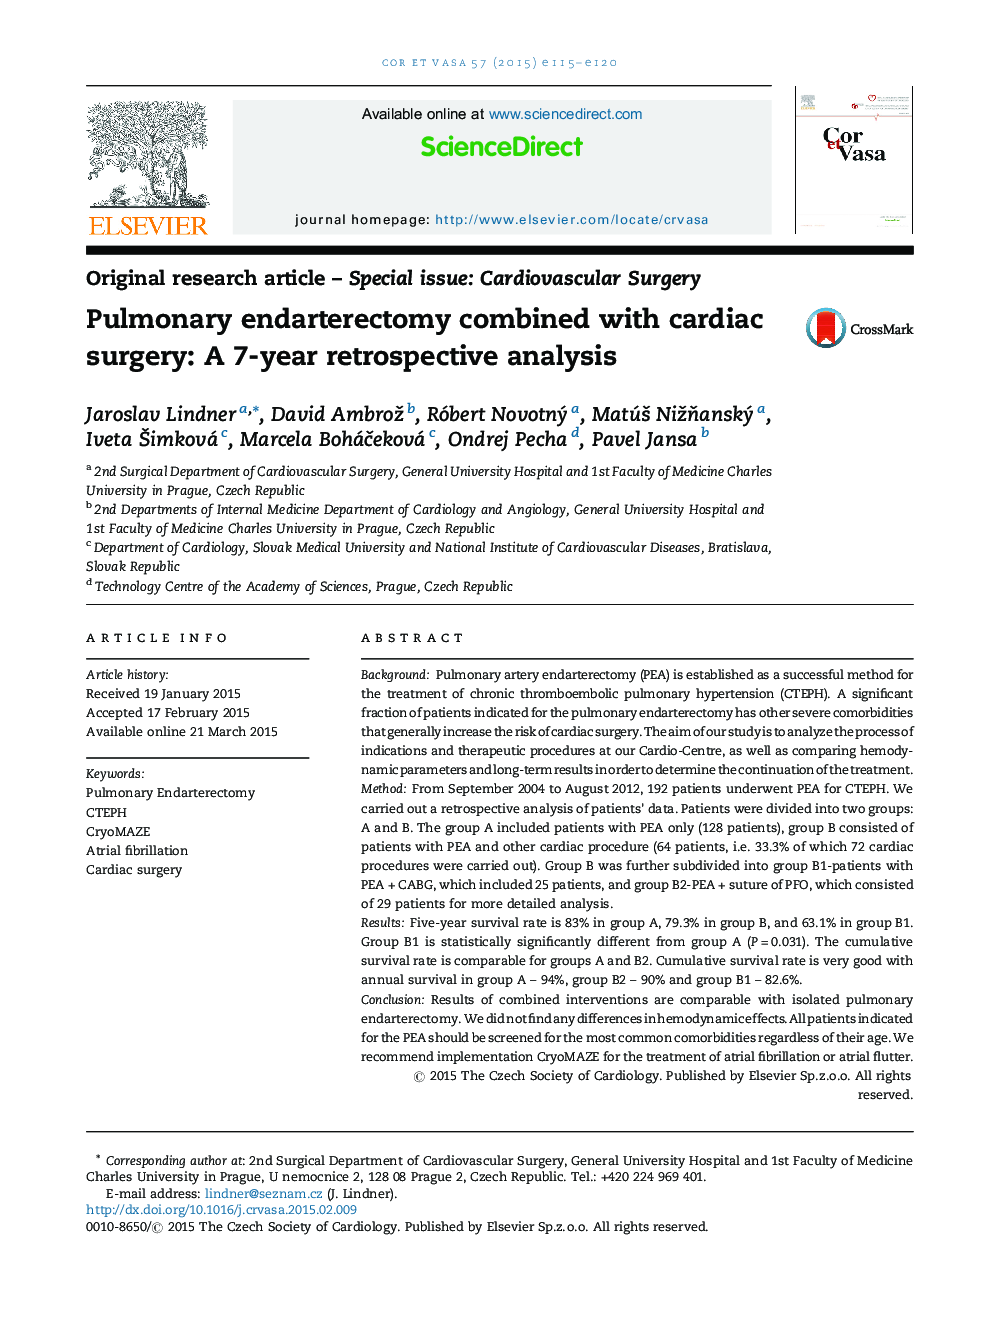 Pulmonary endarterectomy combined with cardiac surgery: A 7-year retrospective analysis